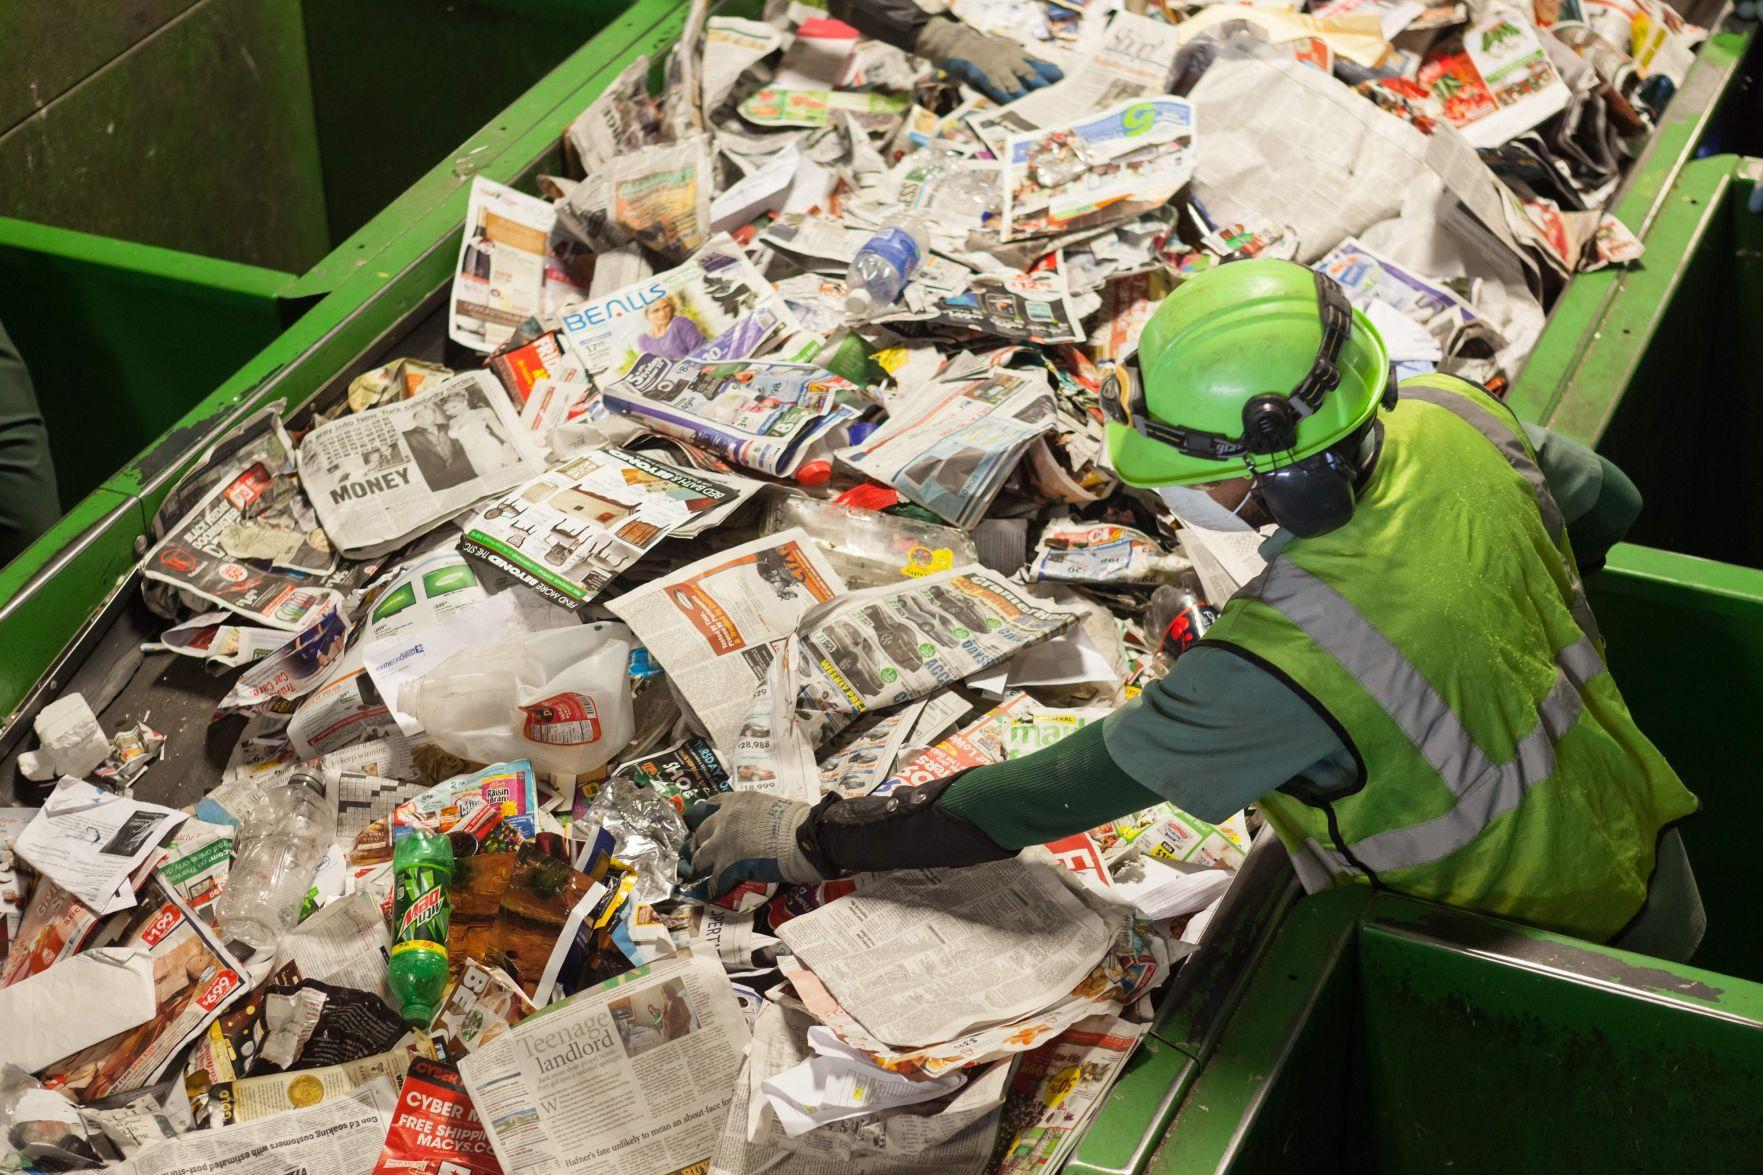 Pasco OKs recycling pilot plan after public survey | News